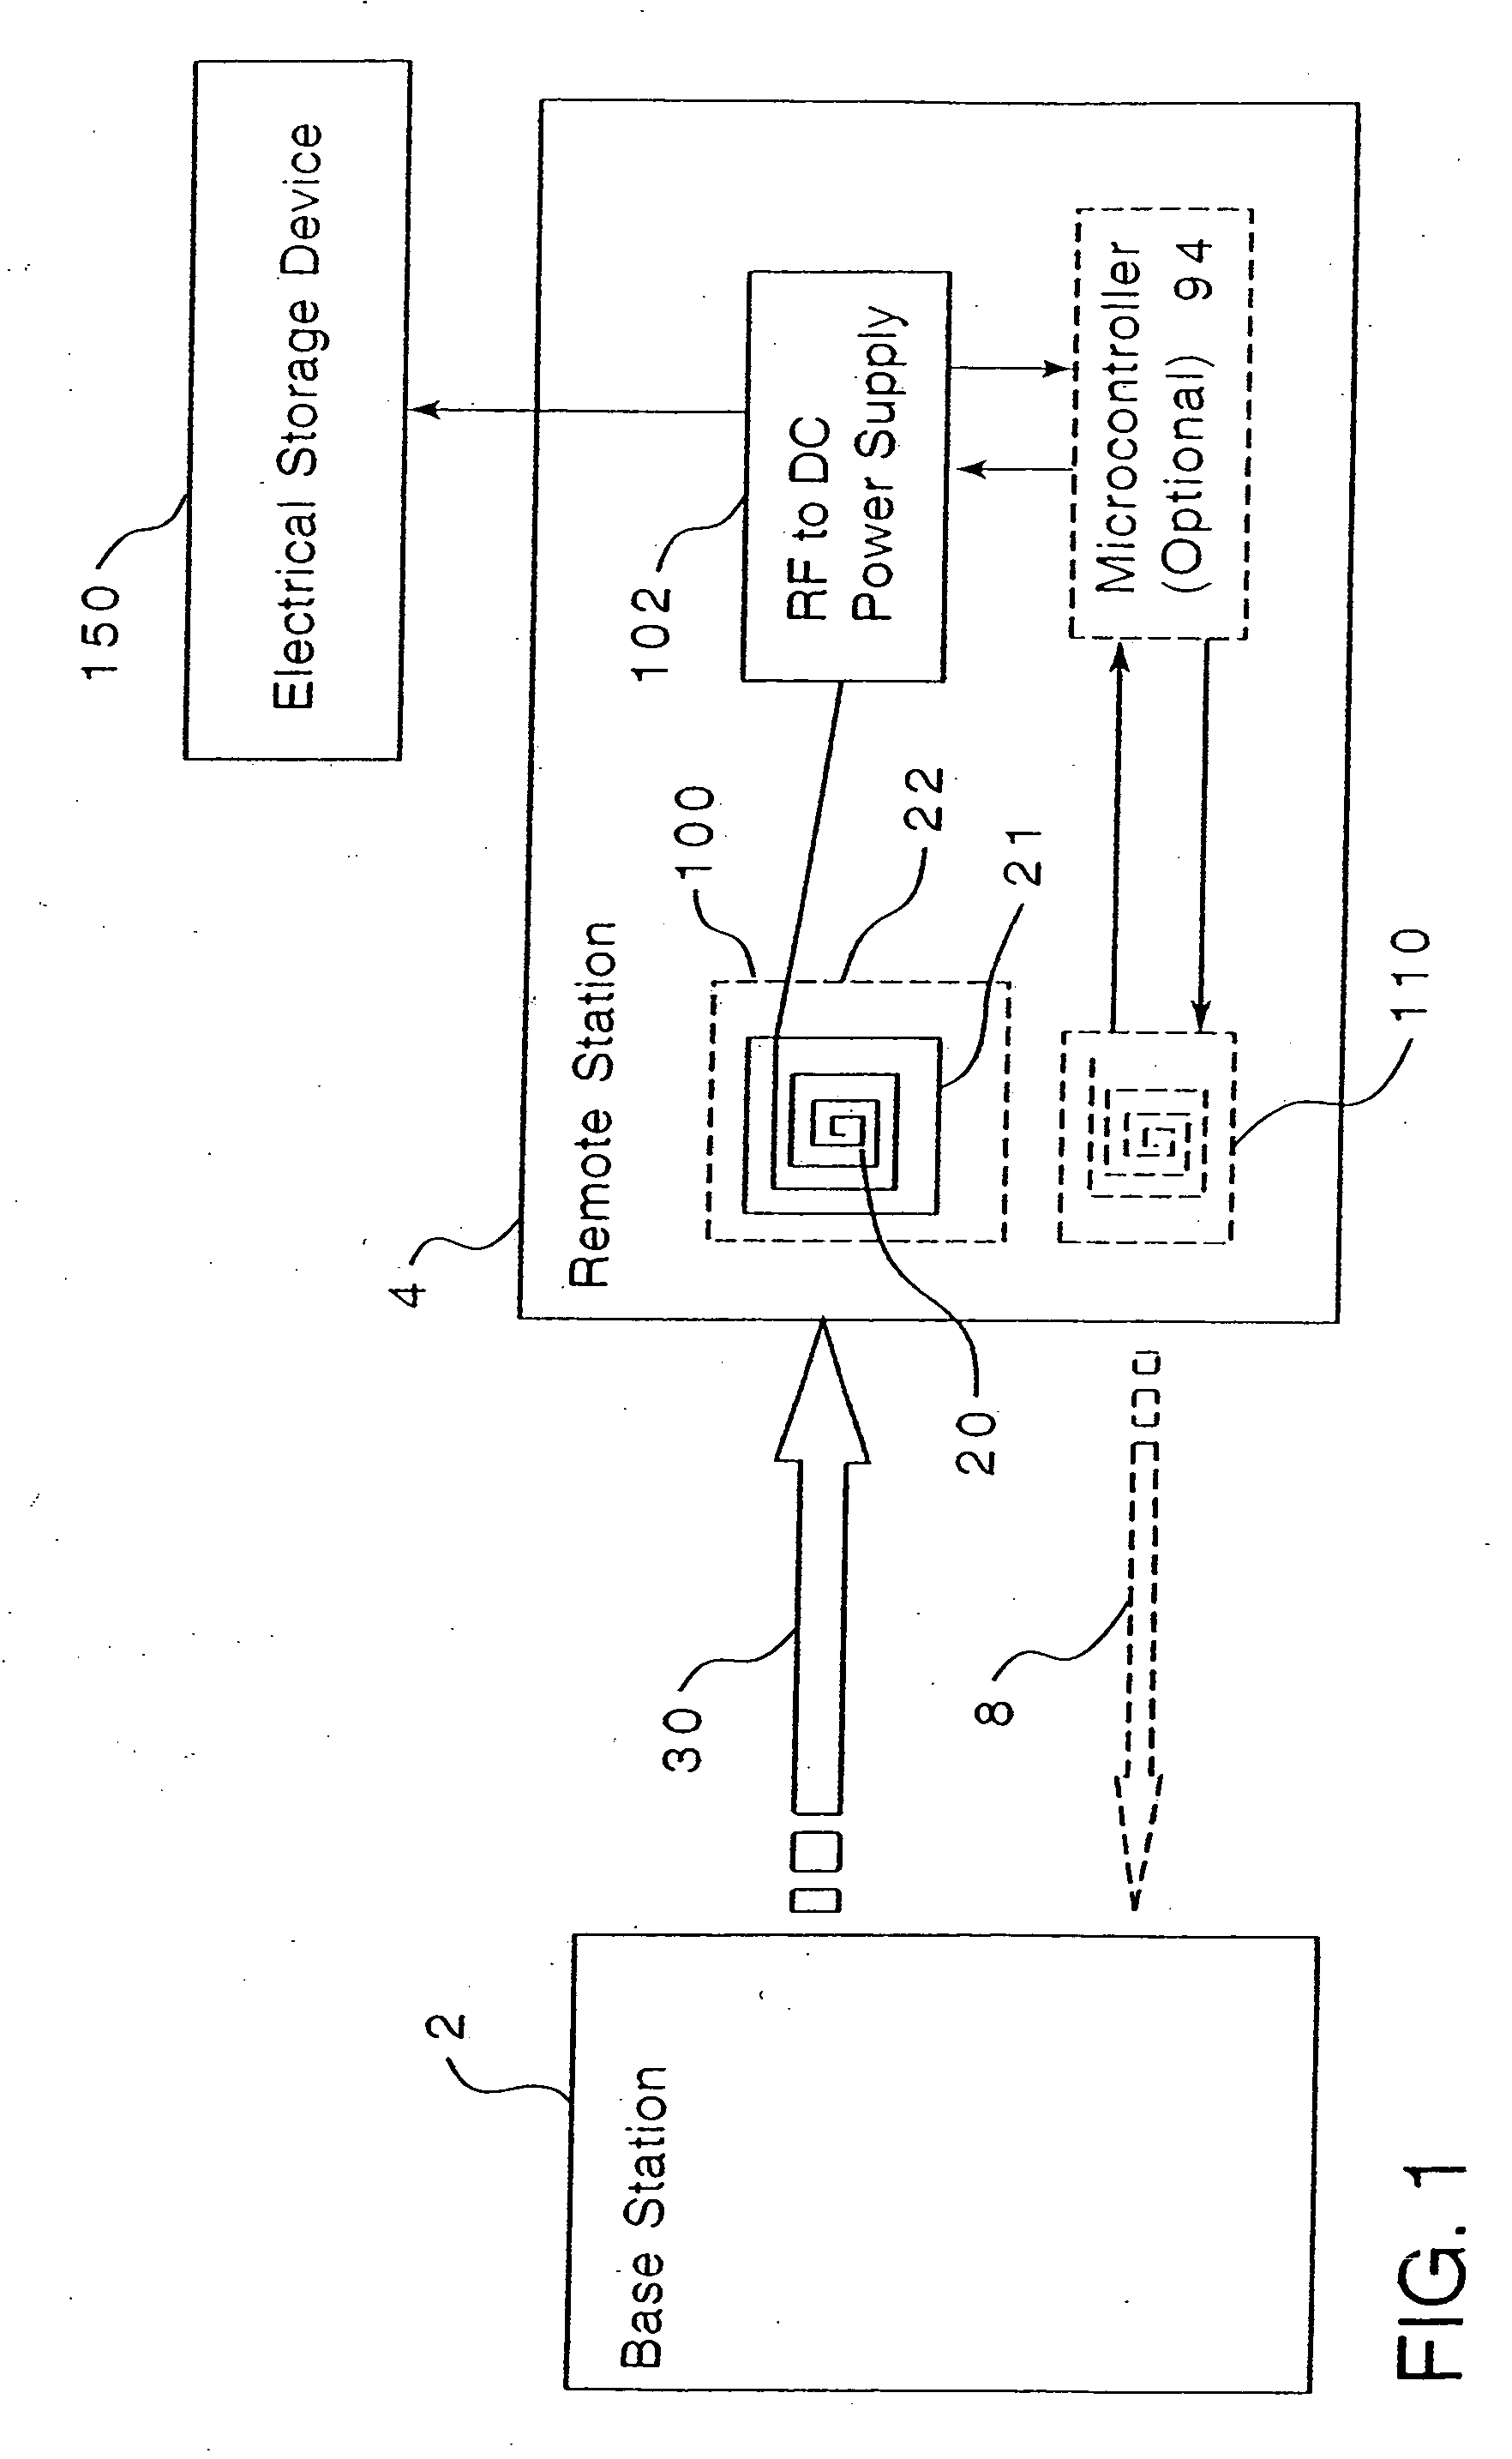 Recharging method and apparatus